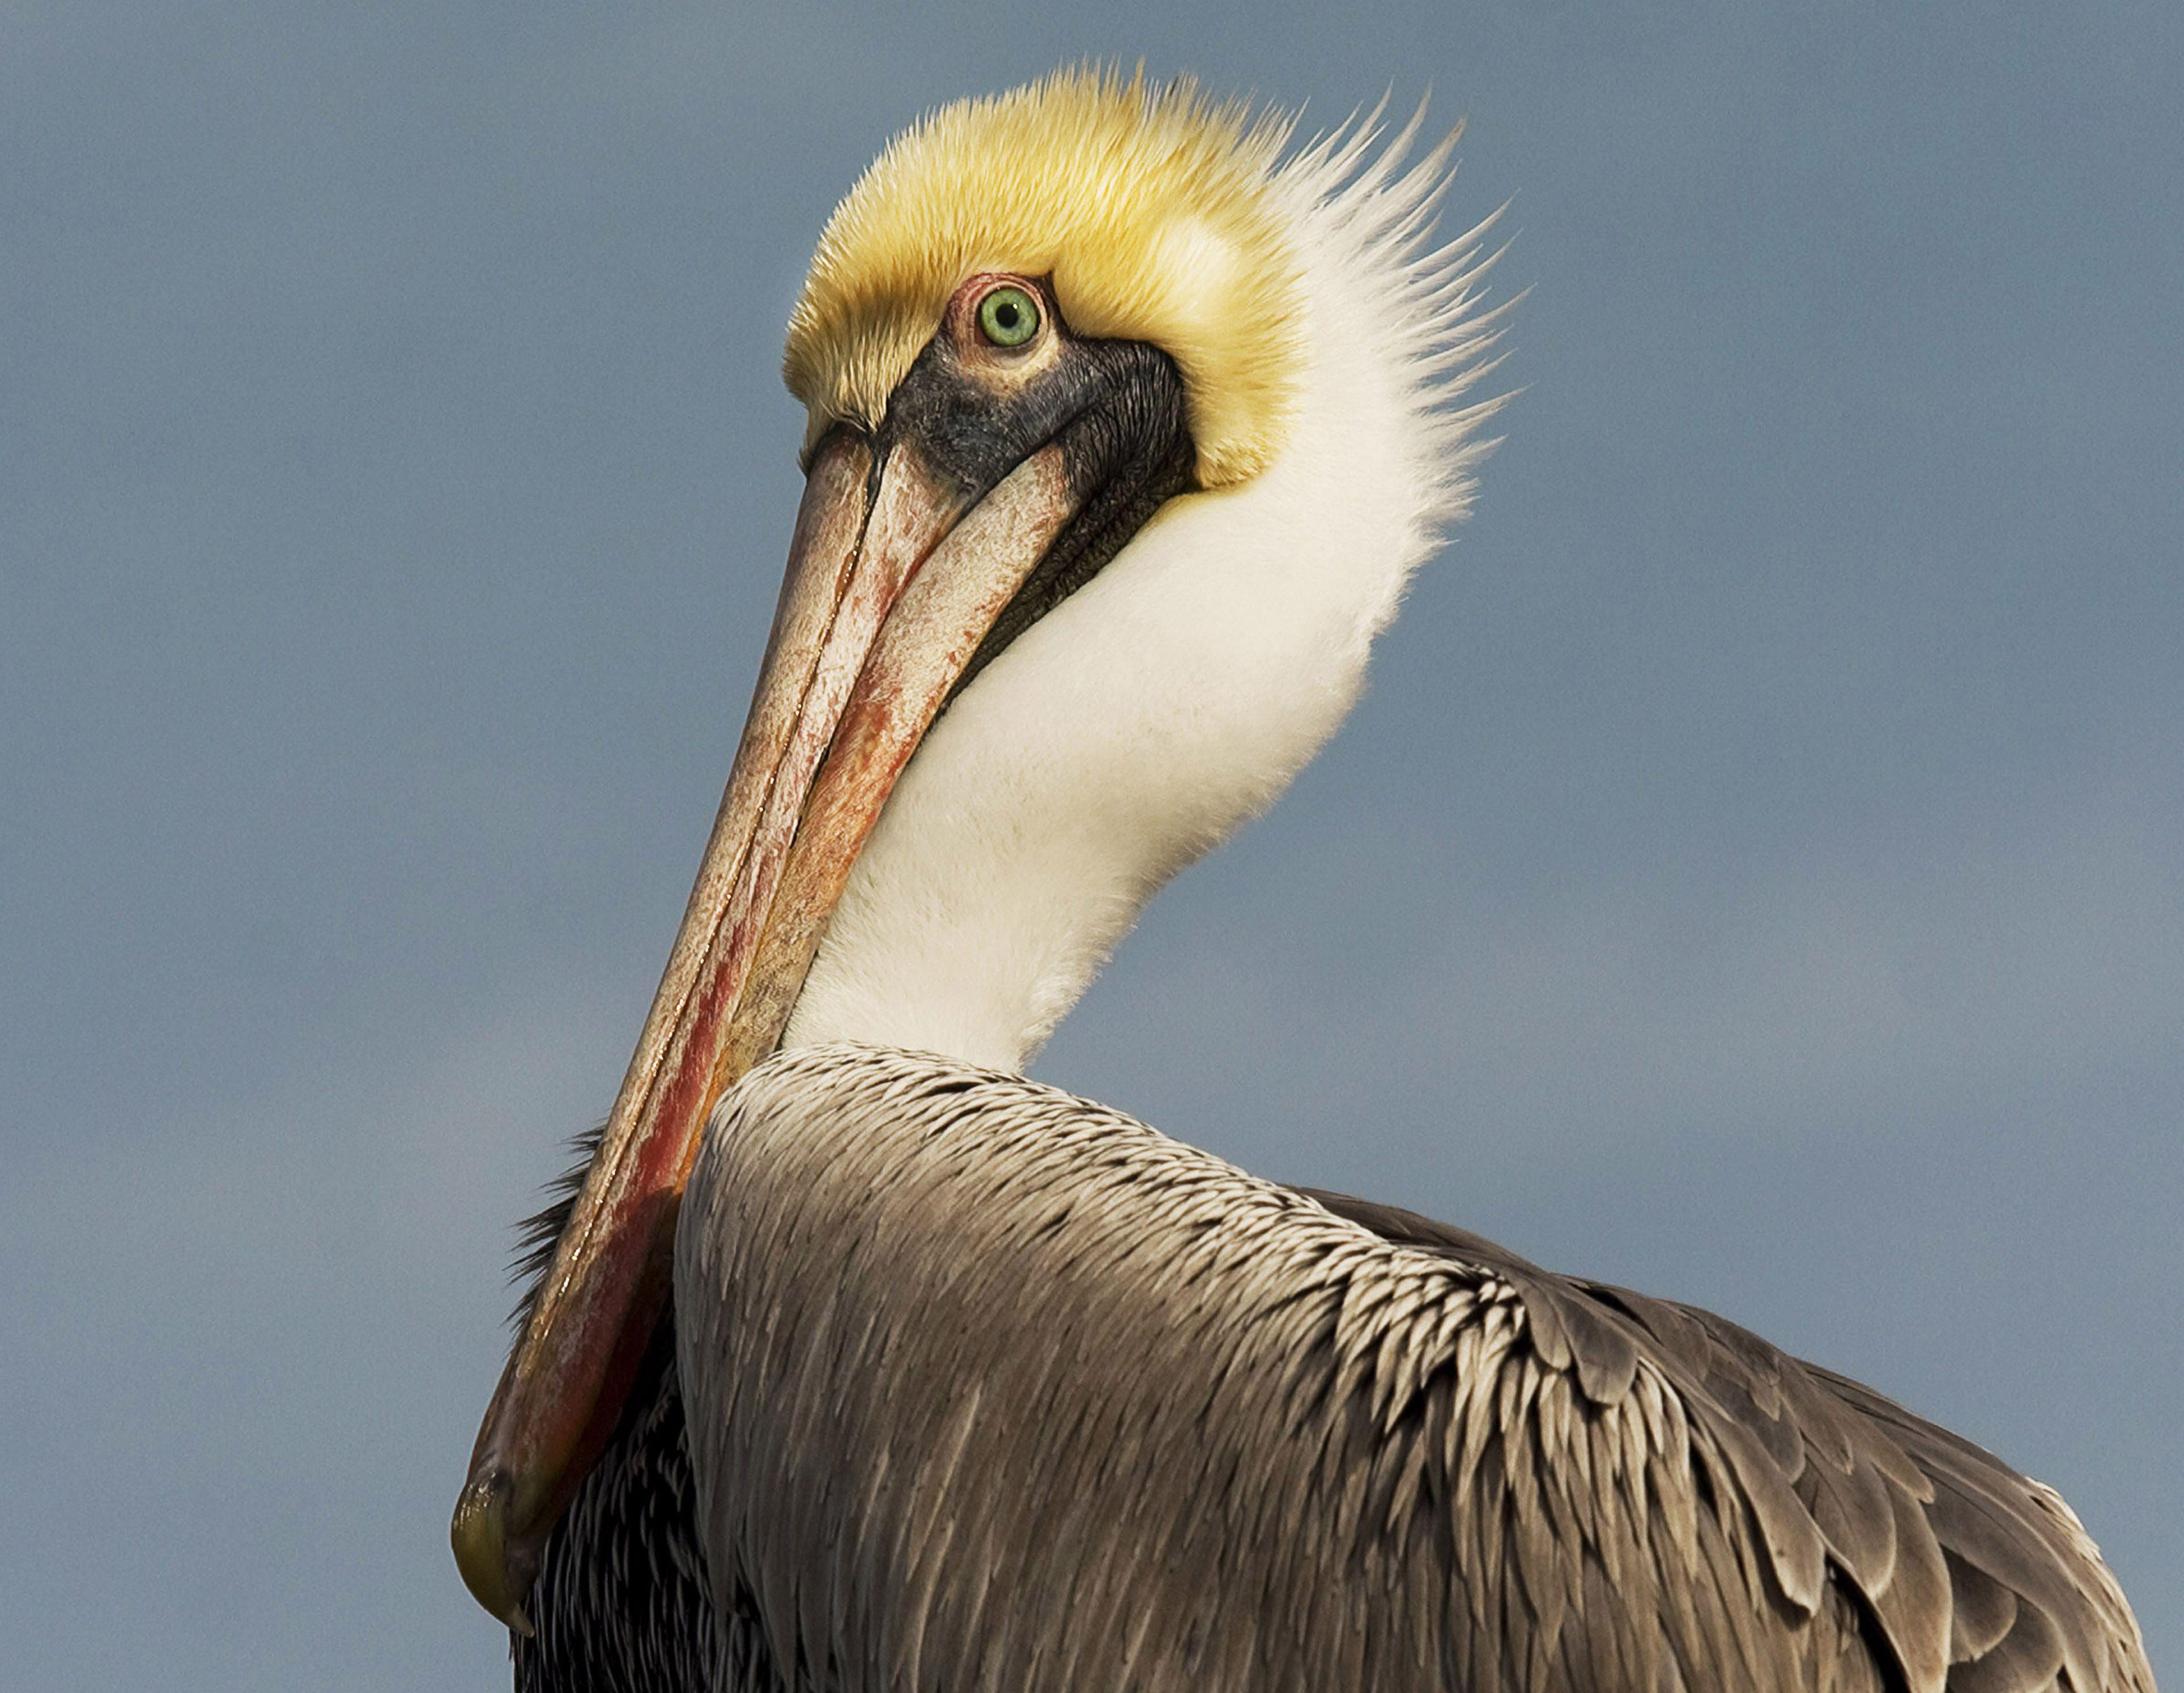 A Wonderful Bird is the Pelican